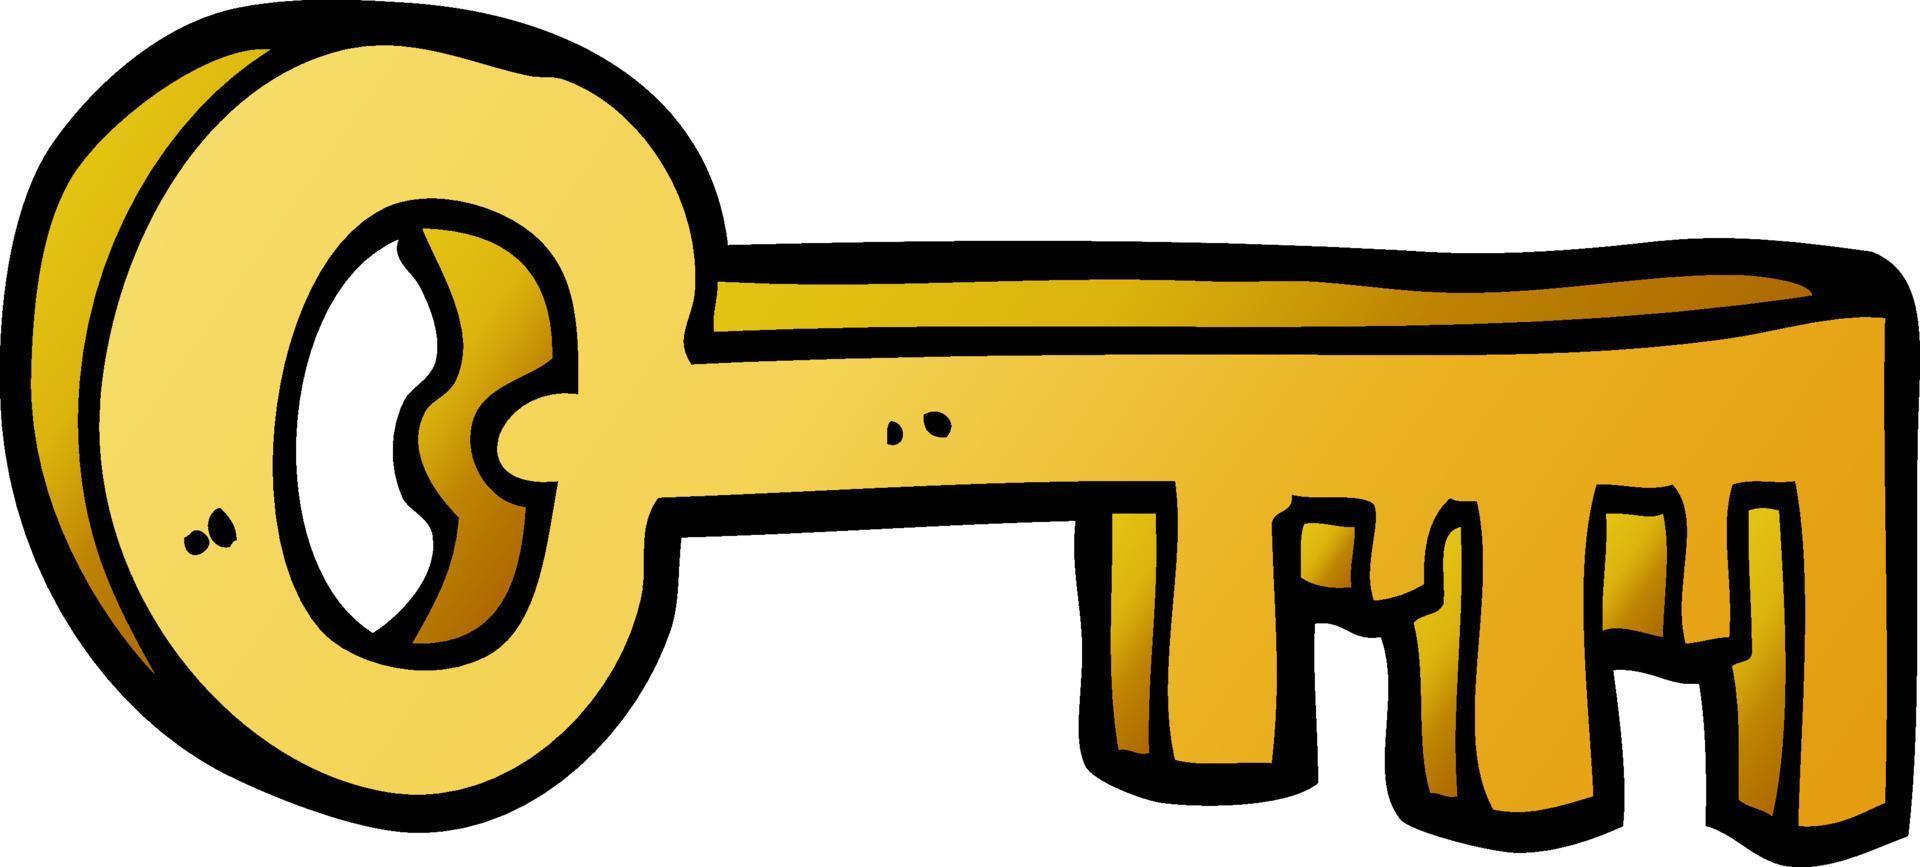 Cartoon-Doodle-Goldschlüssel vektor